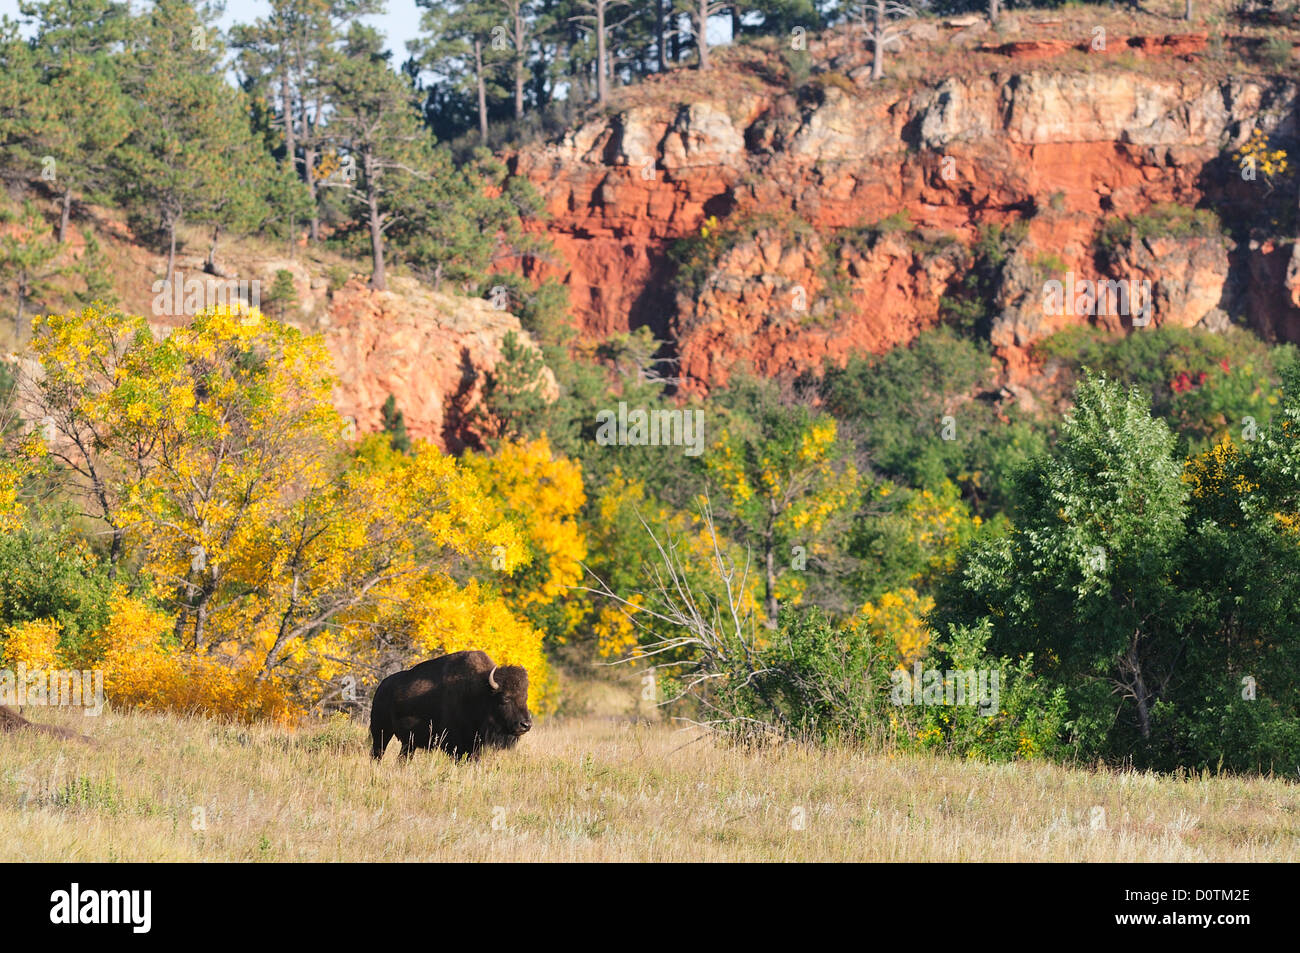 Bison, bos bison, red cliffs, foliage, prairie, Great plains, Custer State Park, Black Hills, South Dakota, USA, United States, Stock Photo